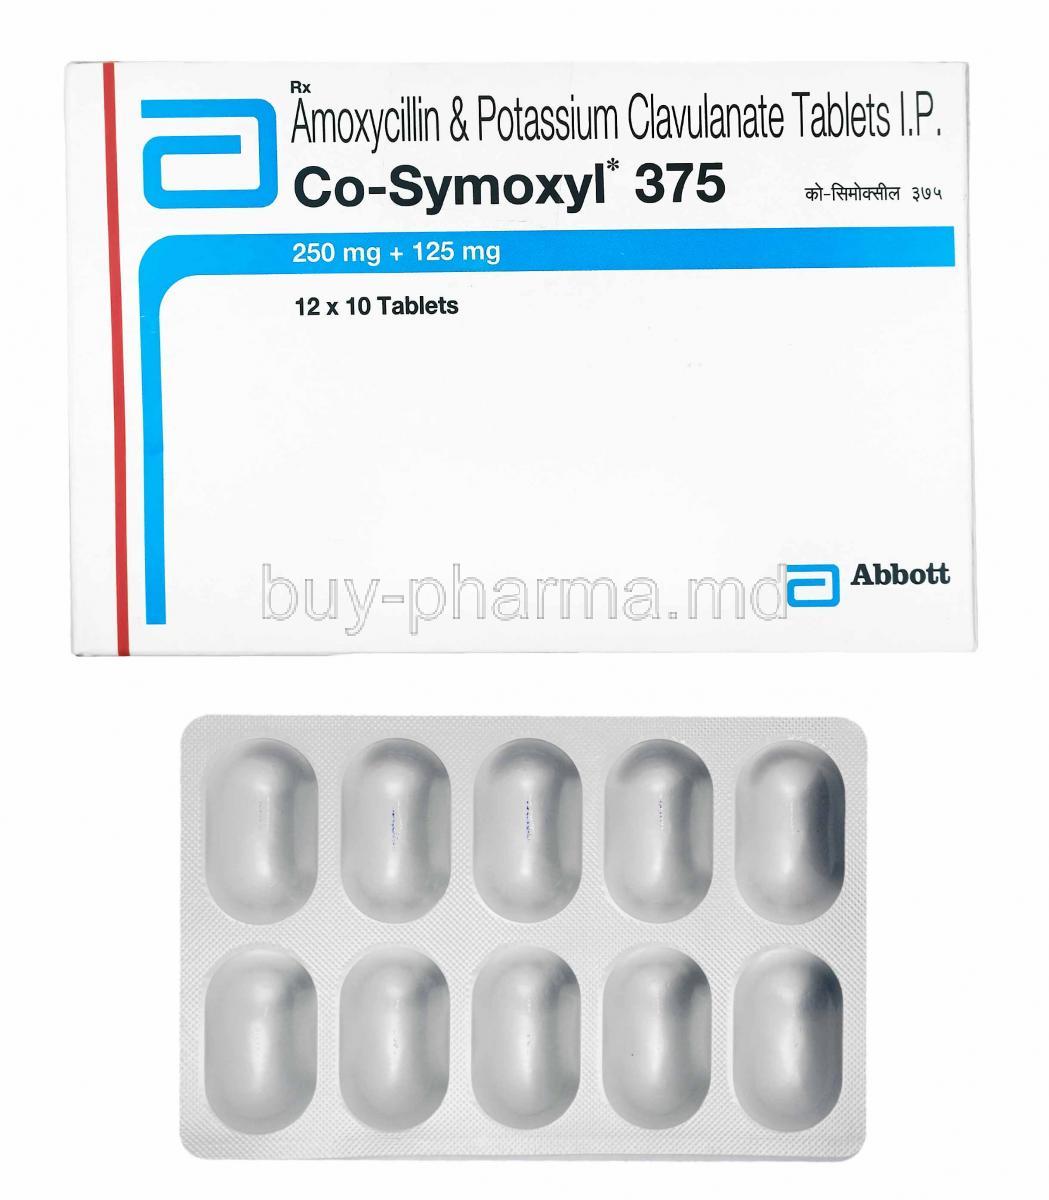 Co-Symoxyl, Amoxicillin and Clavulanic Acid 375mg box and tablets